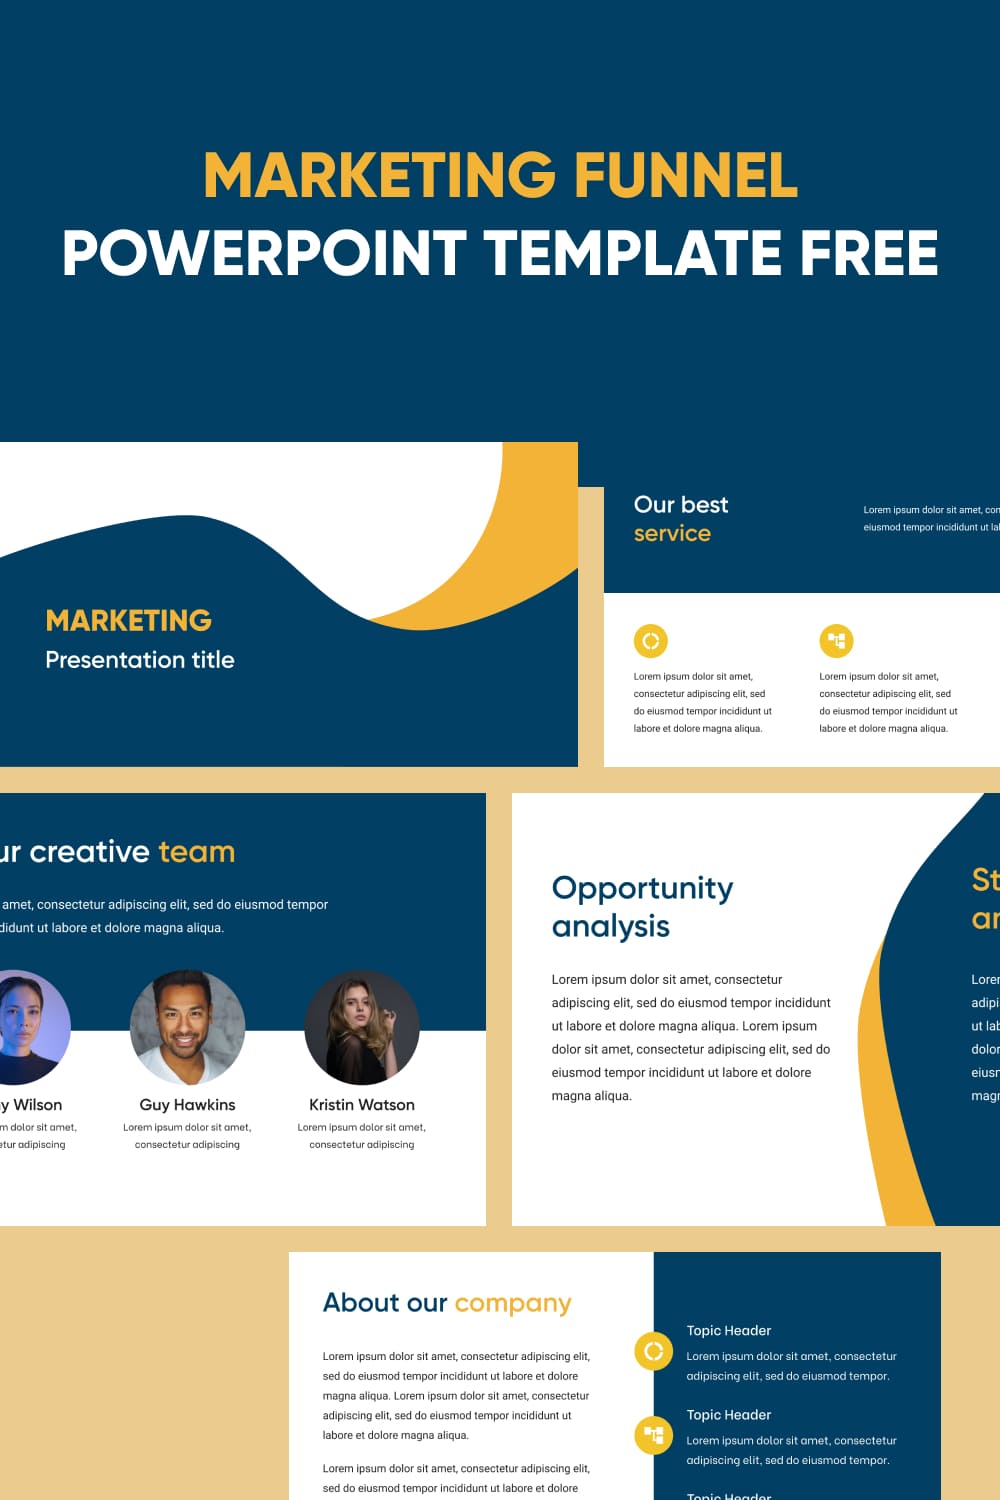 Marketing Funnel Powerpoint Template Free Pinterest.